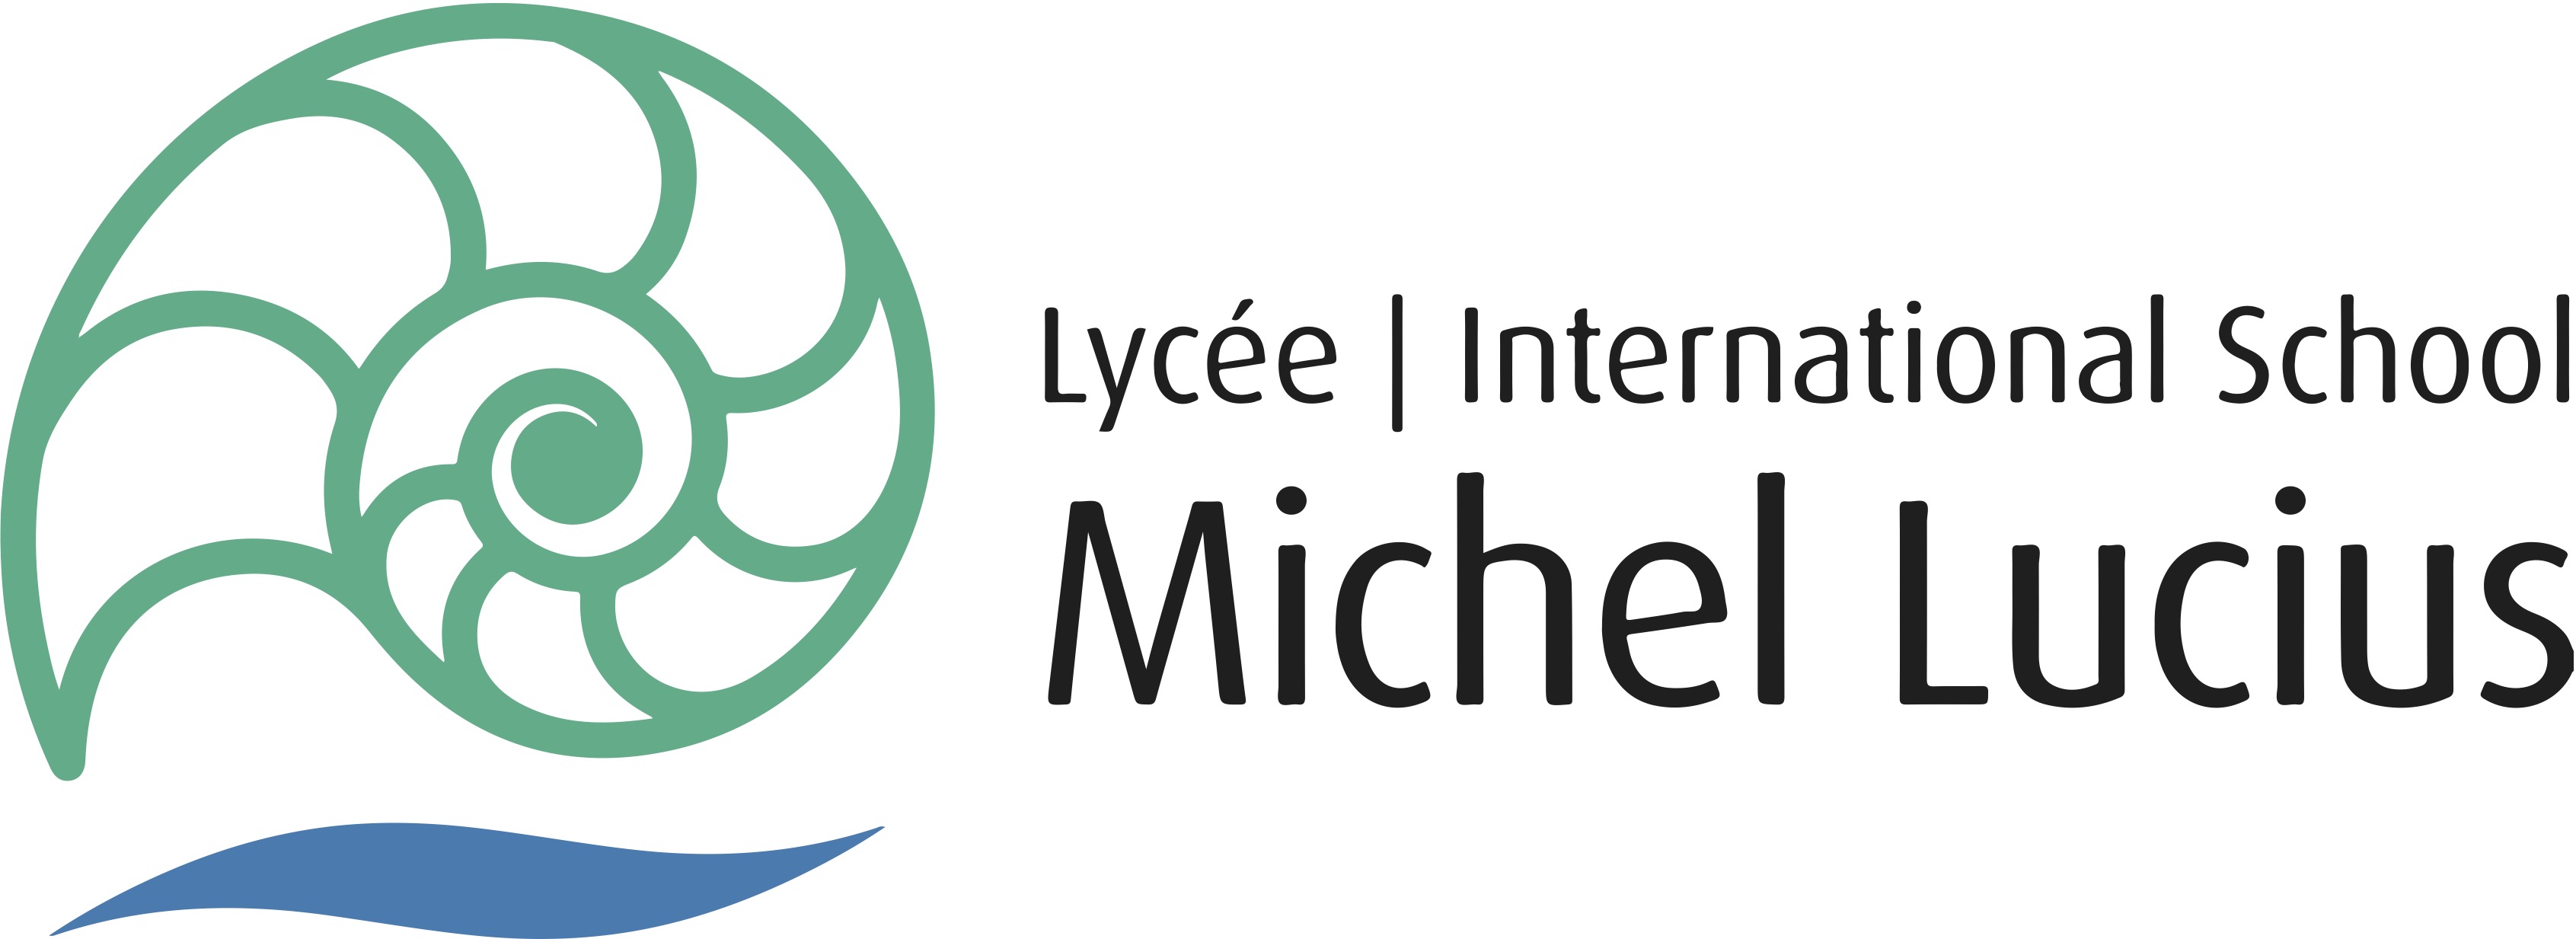 Logo Lycée - International School Michel Lucius